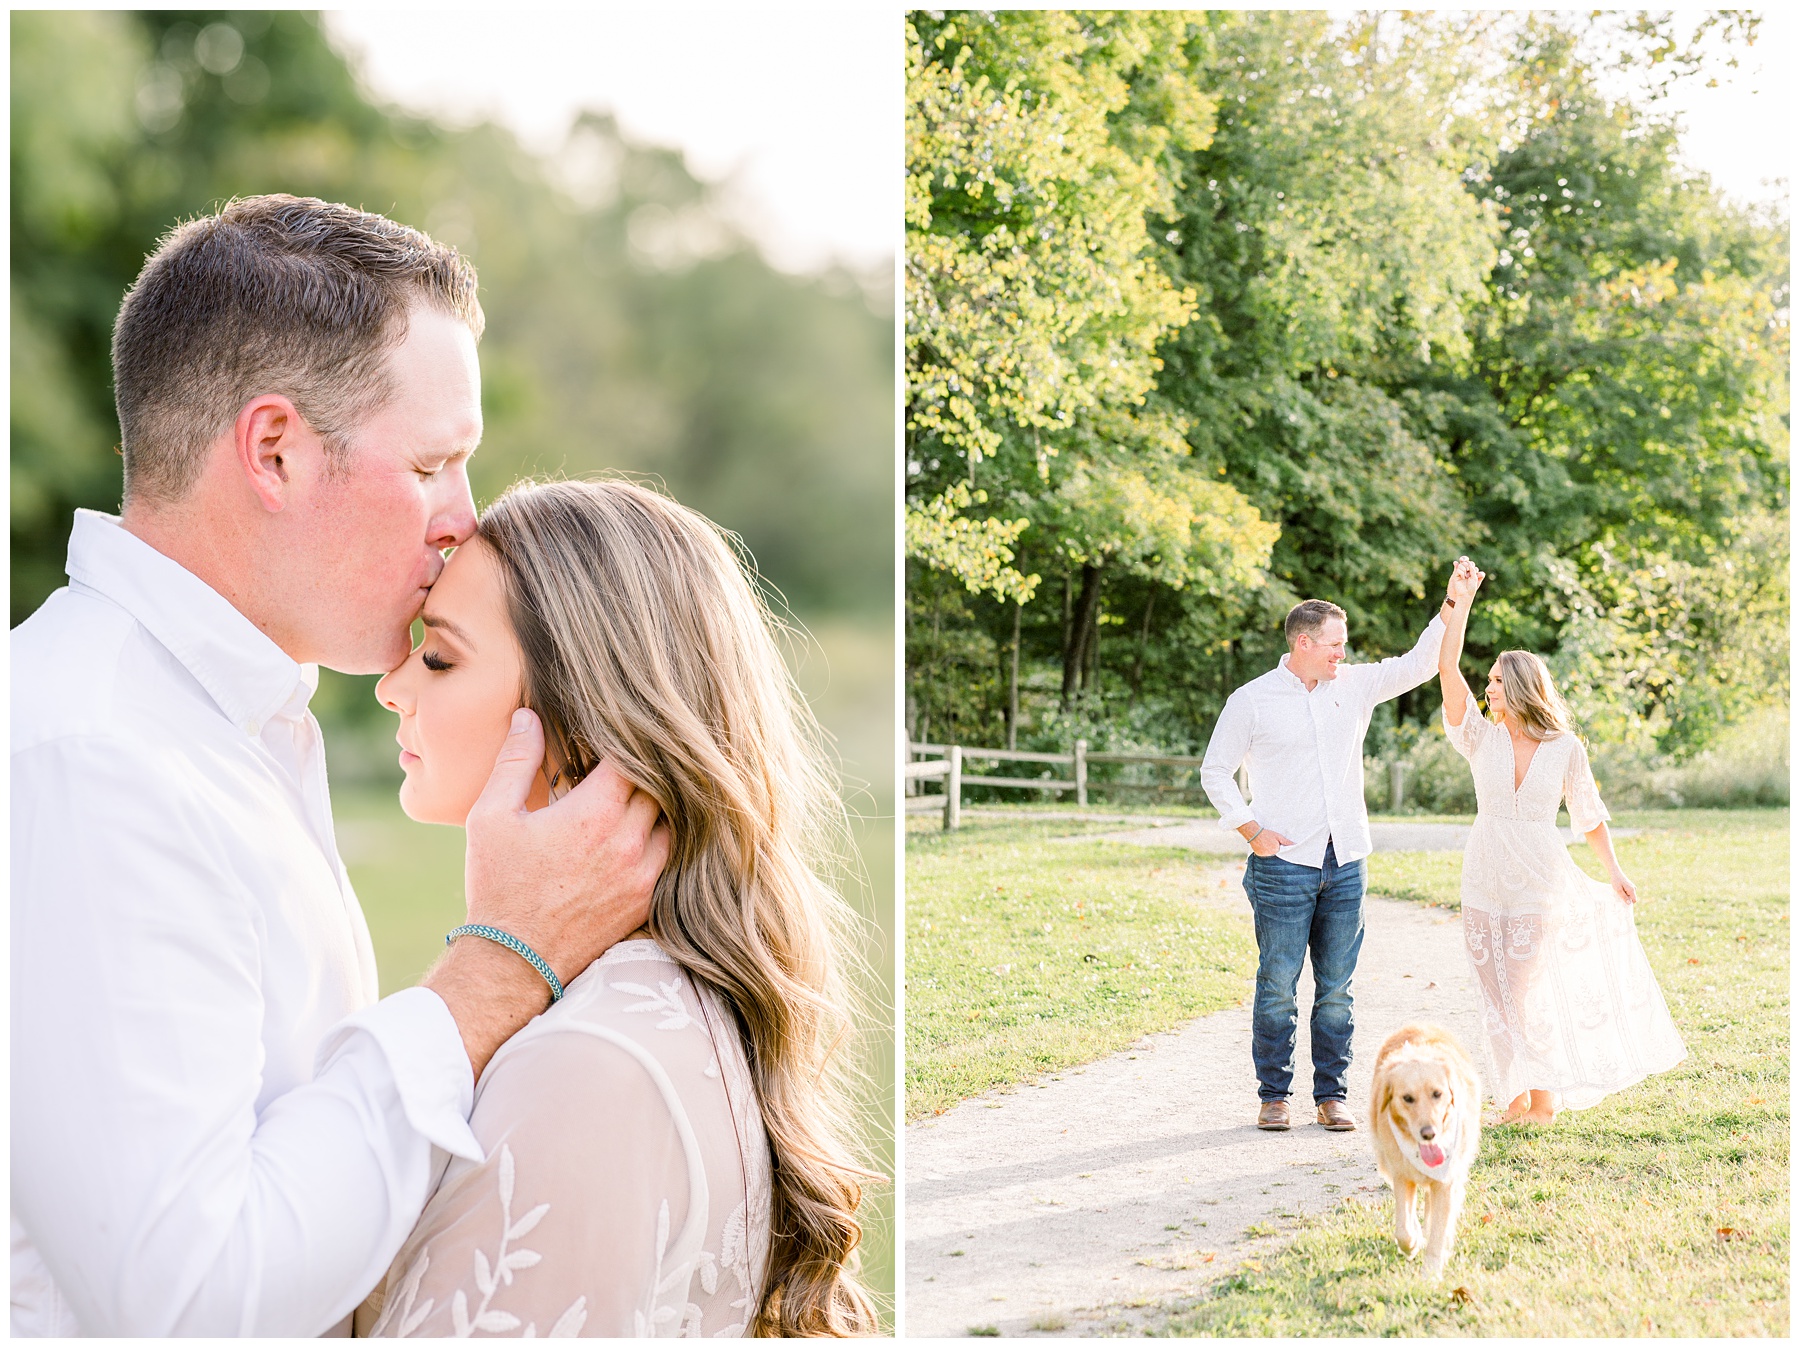 Hoover Reservoir Park Engagement Session by Amanda Eloise Photography. North Carolina Wedding Photographer. Engagement session with dog